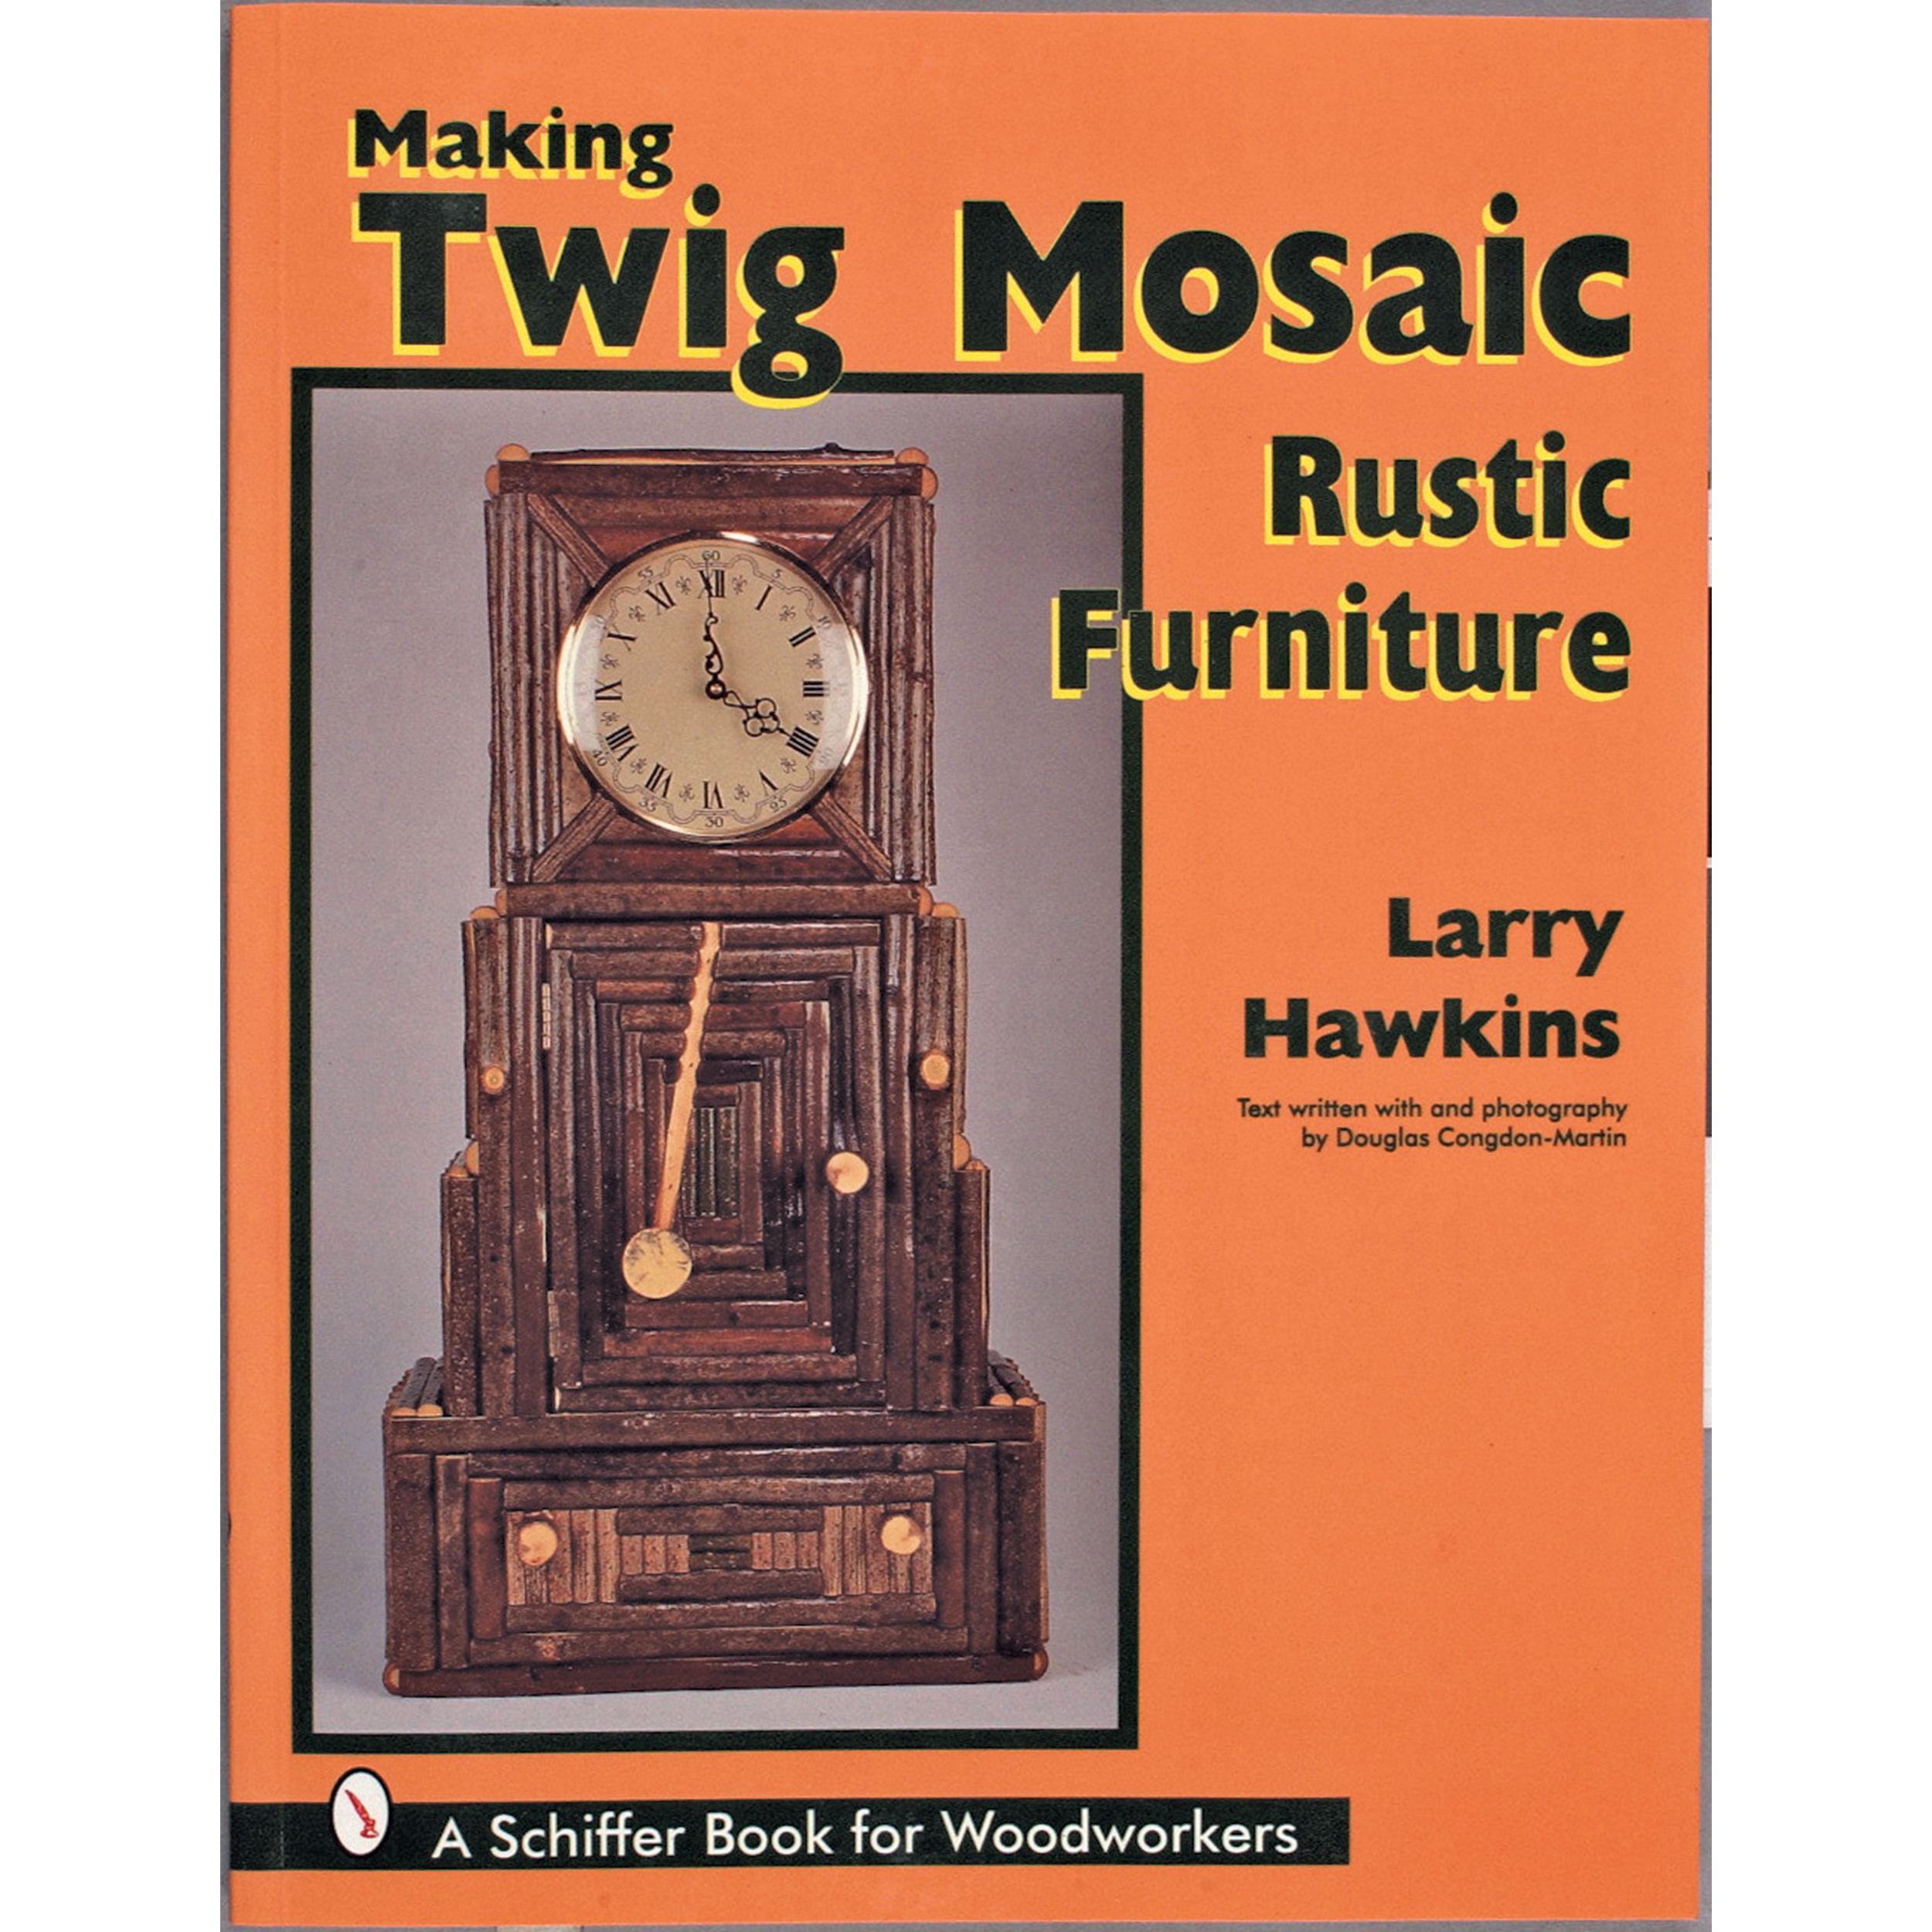 Making Twig Mosaic Rustic Furniture